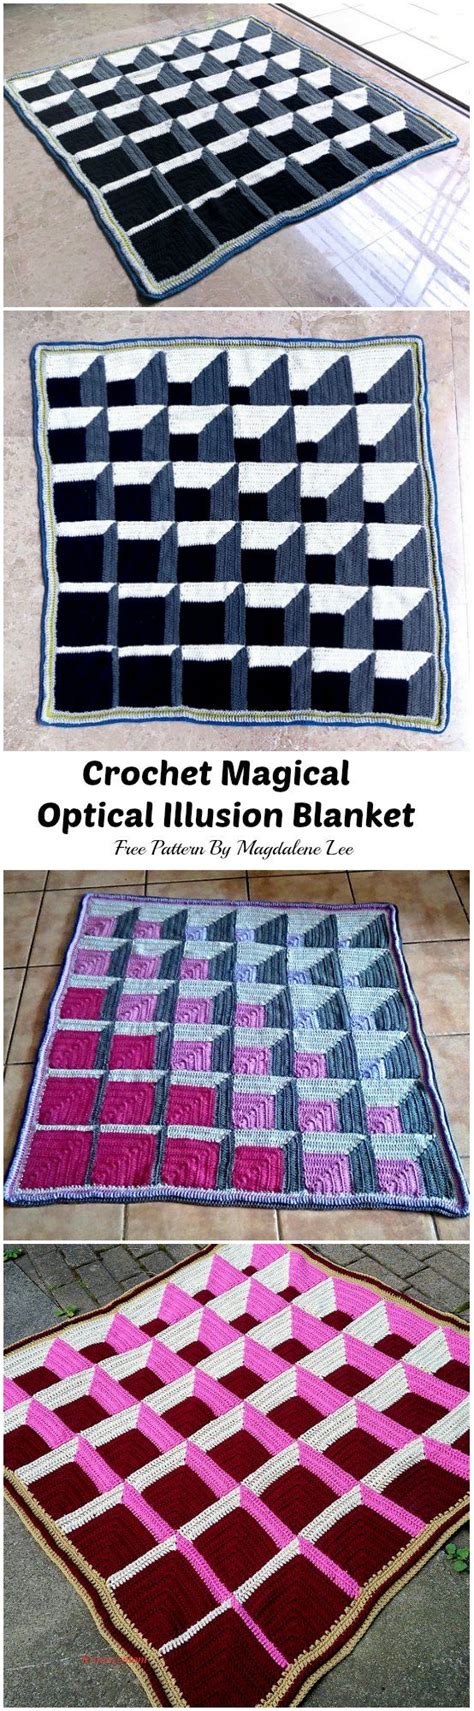 Crochet Magical Optical Illusion Blanket Crochet Blanket Patterns Crochet Patterns Crochet